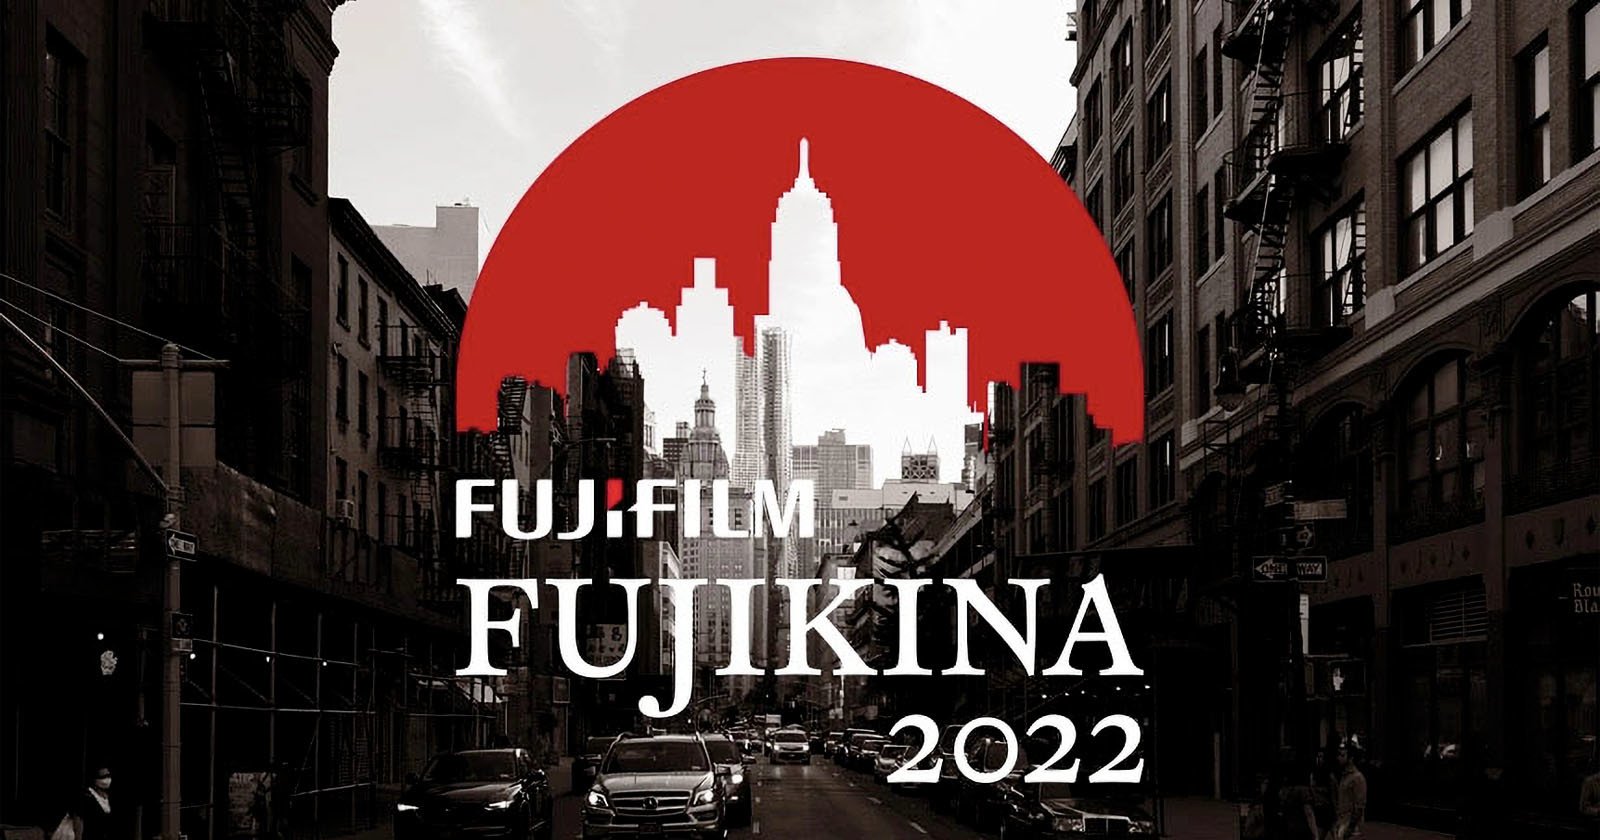 Fujifilm to Host Fujikina Photo Festival in New York This Fall